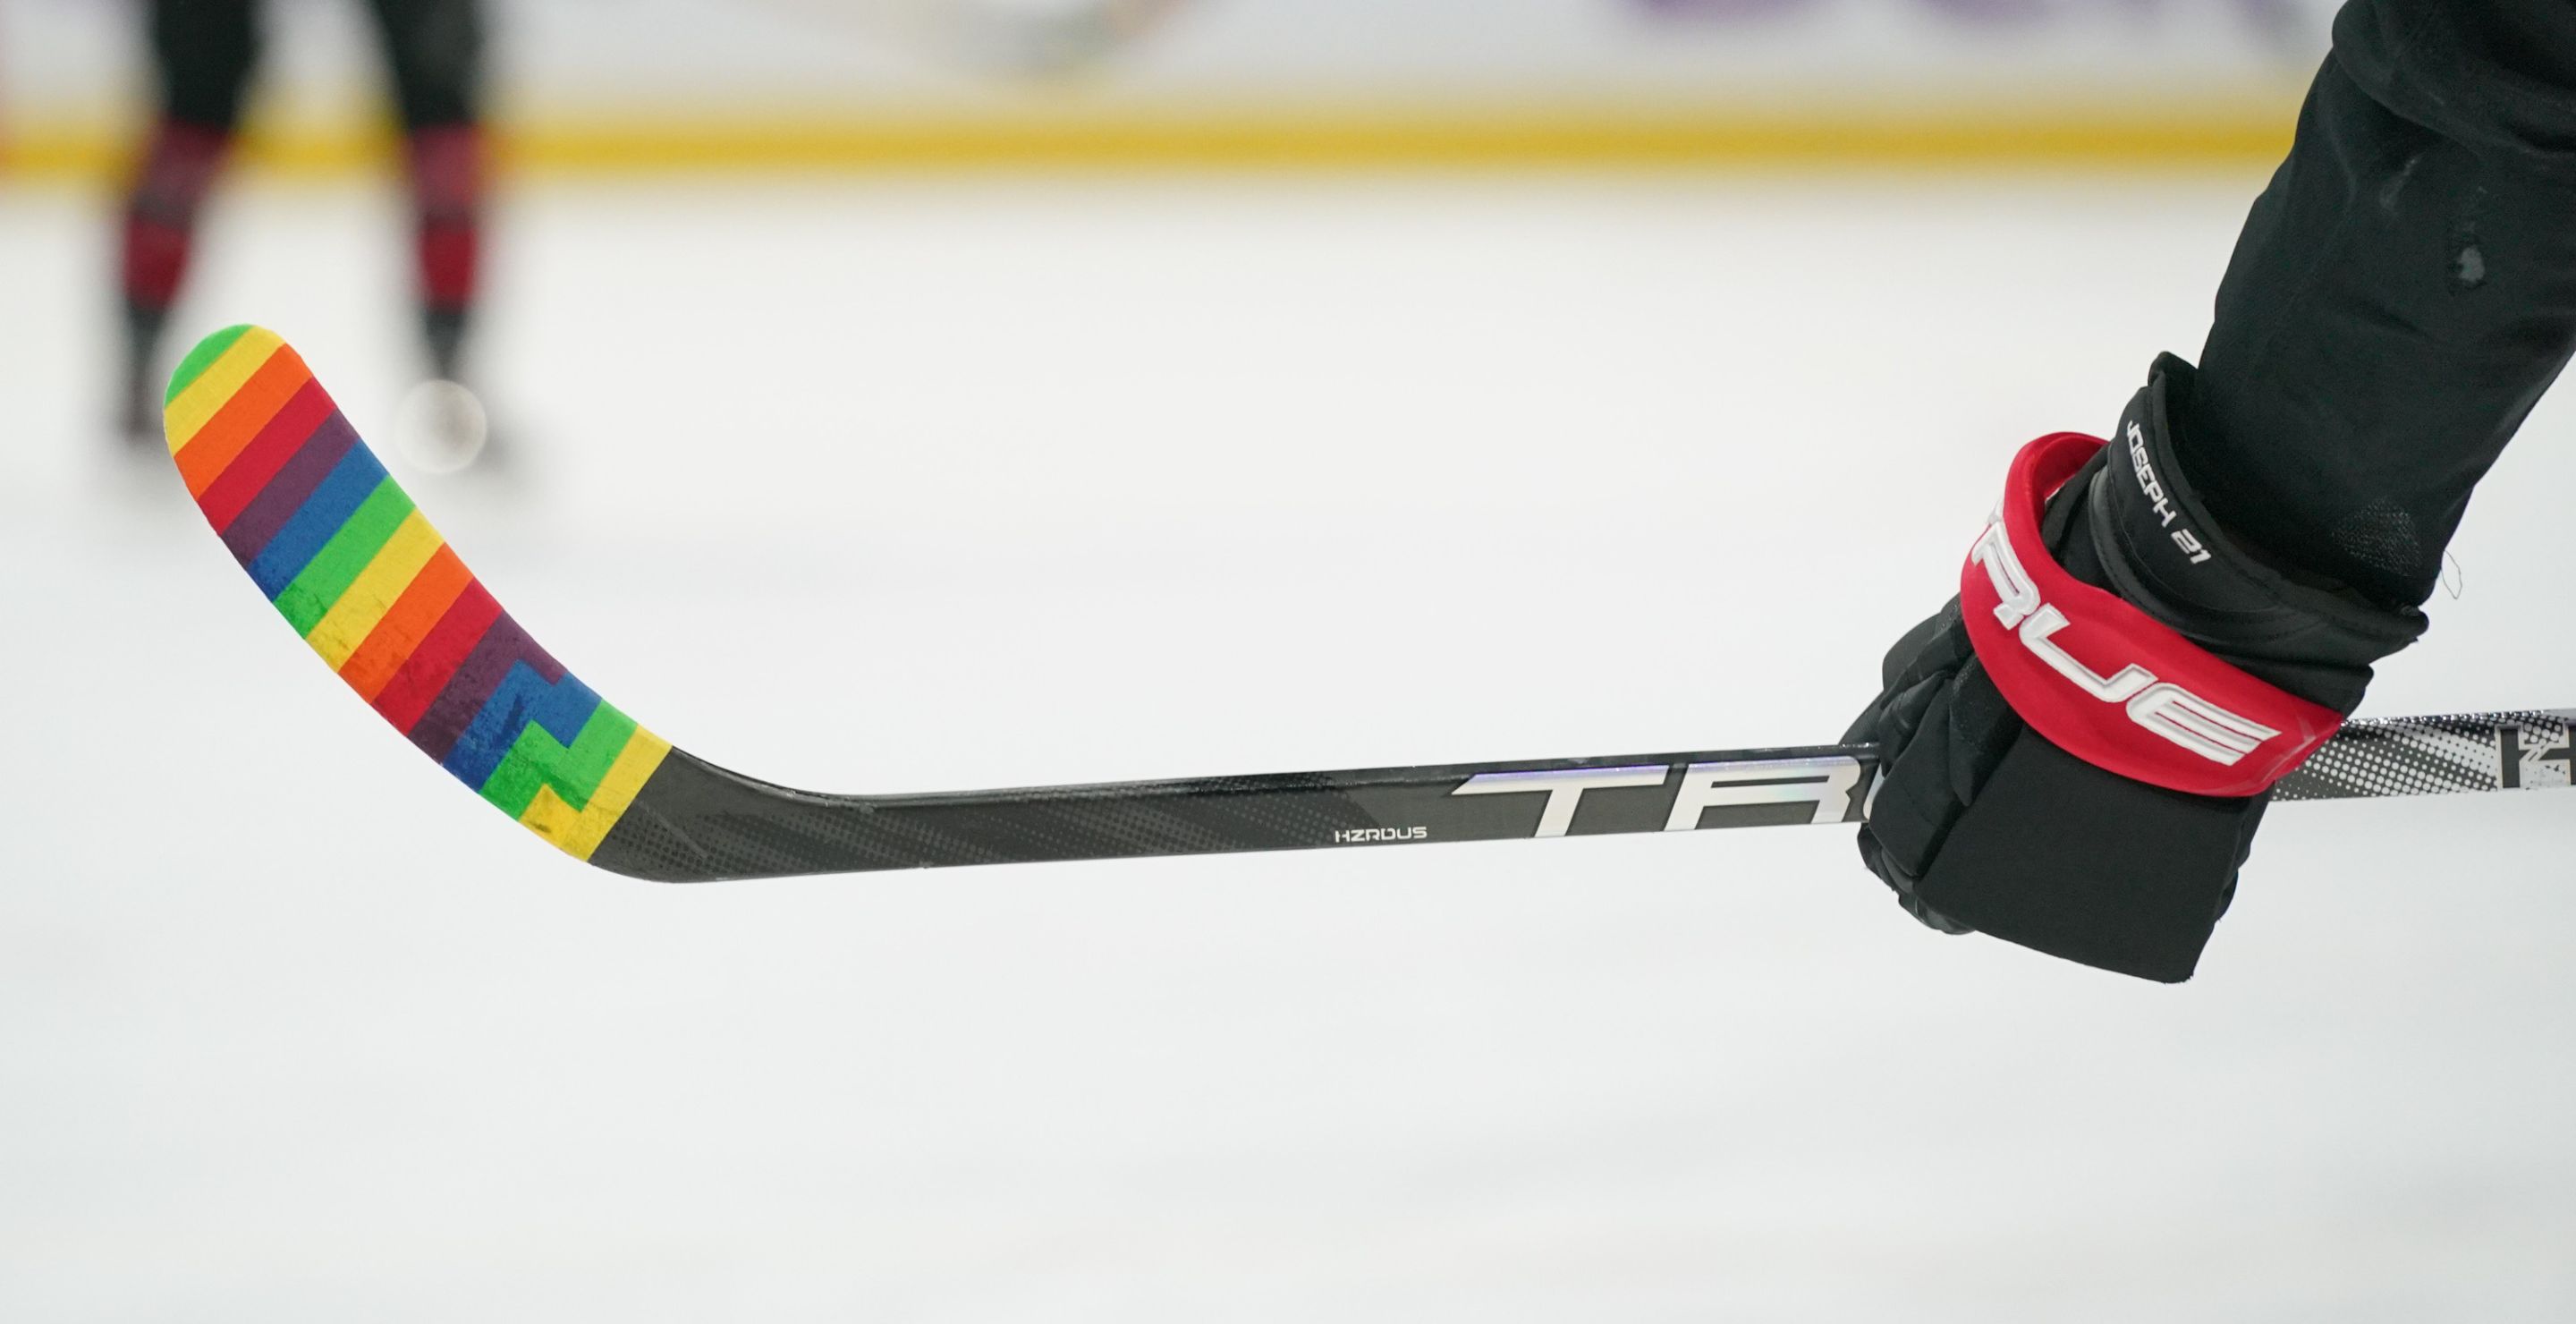 NHL won't use specialty pregame jerseys next season